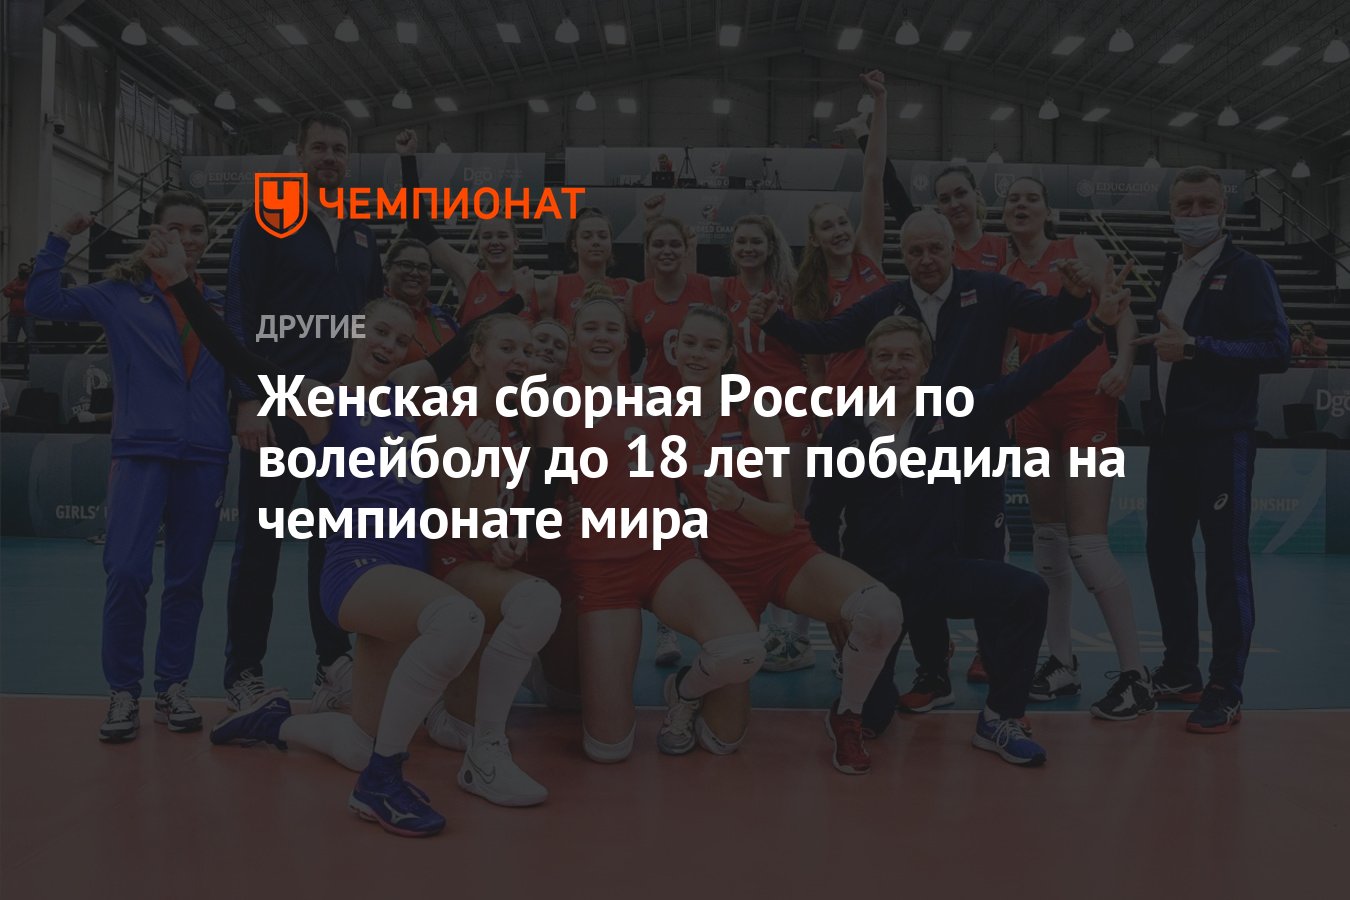 Russian women's national volleyball team U18 won the world championship thumbnail